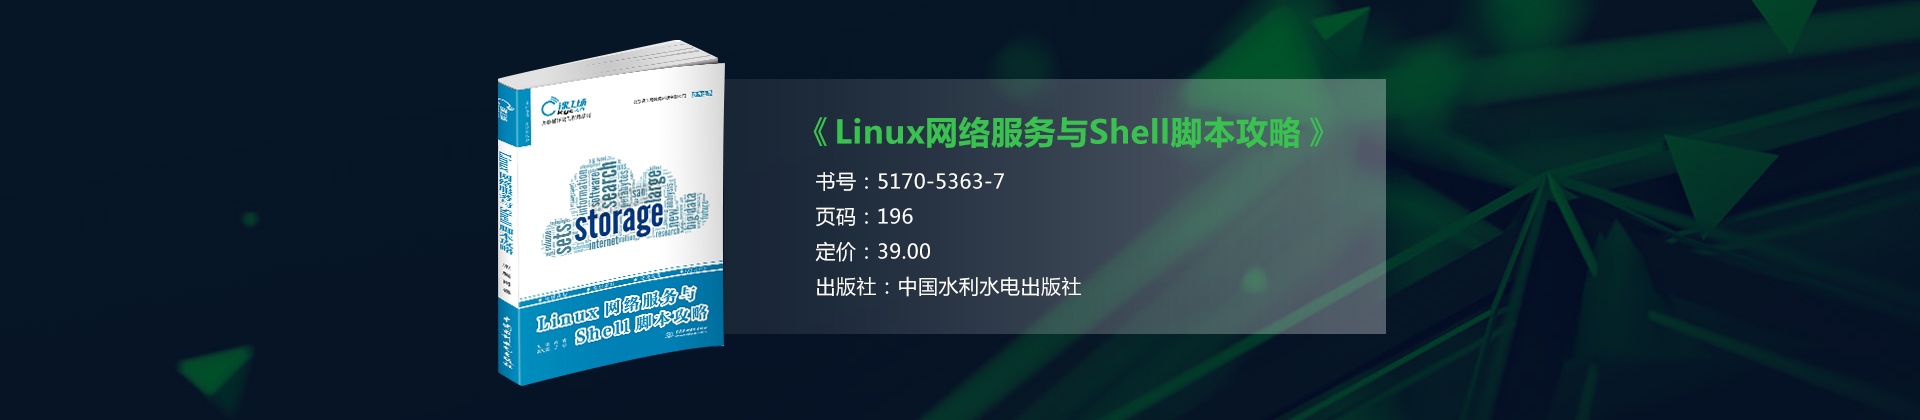 《Linux网络服务与Shell脚本攻略》